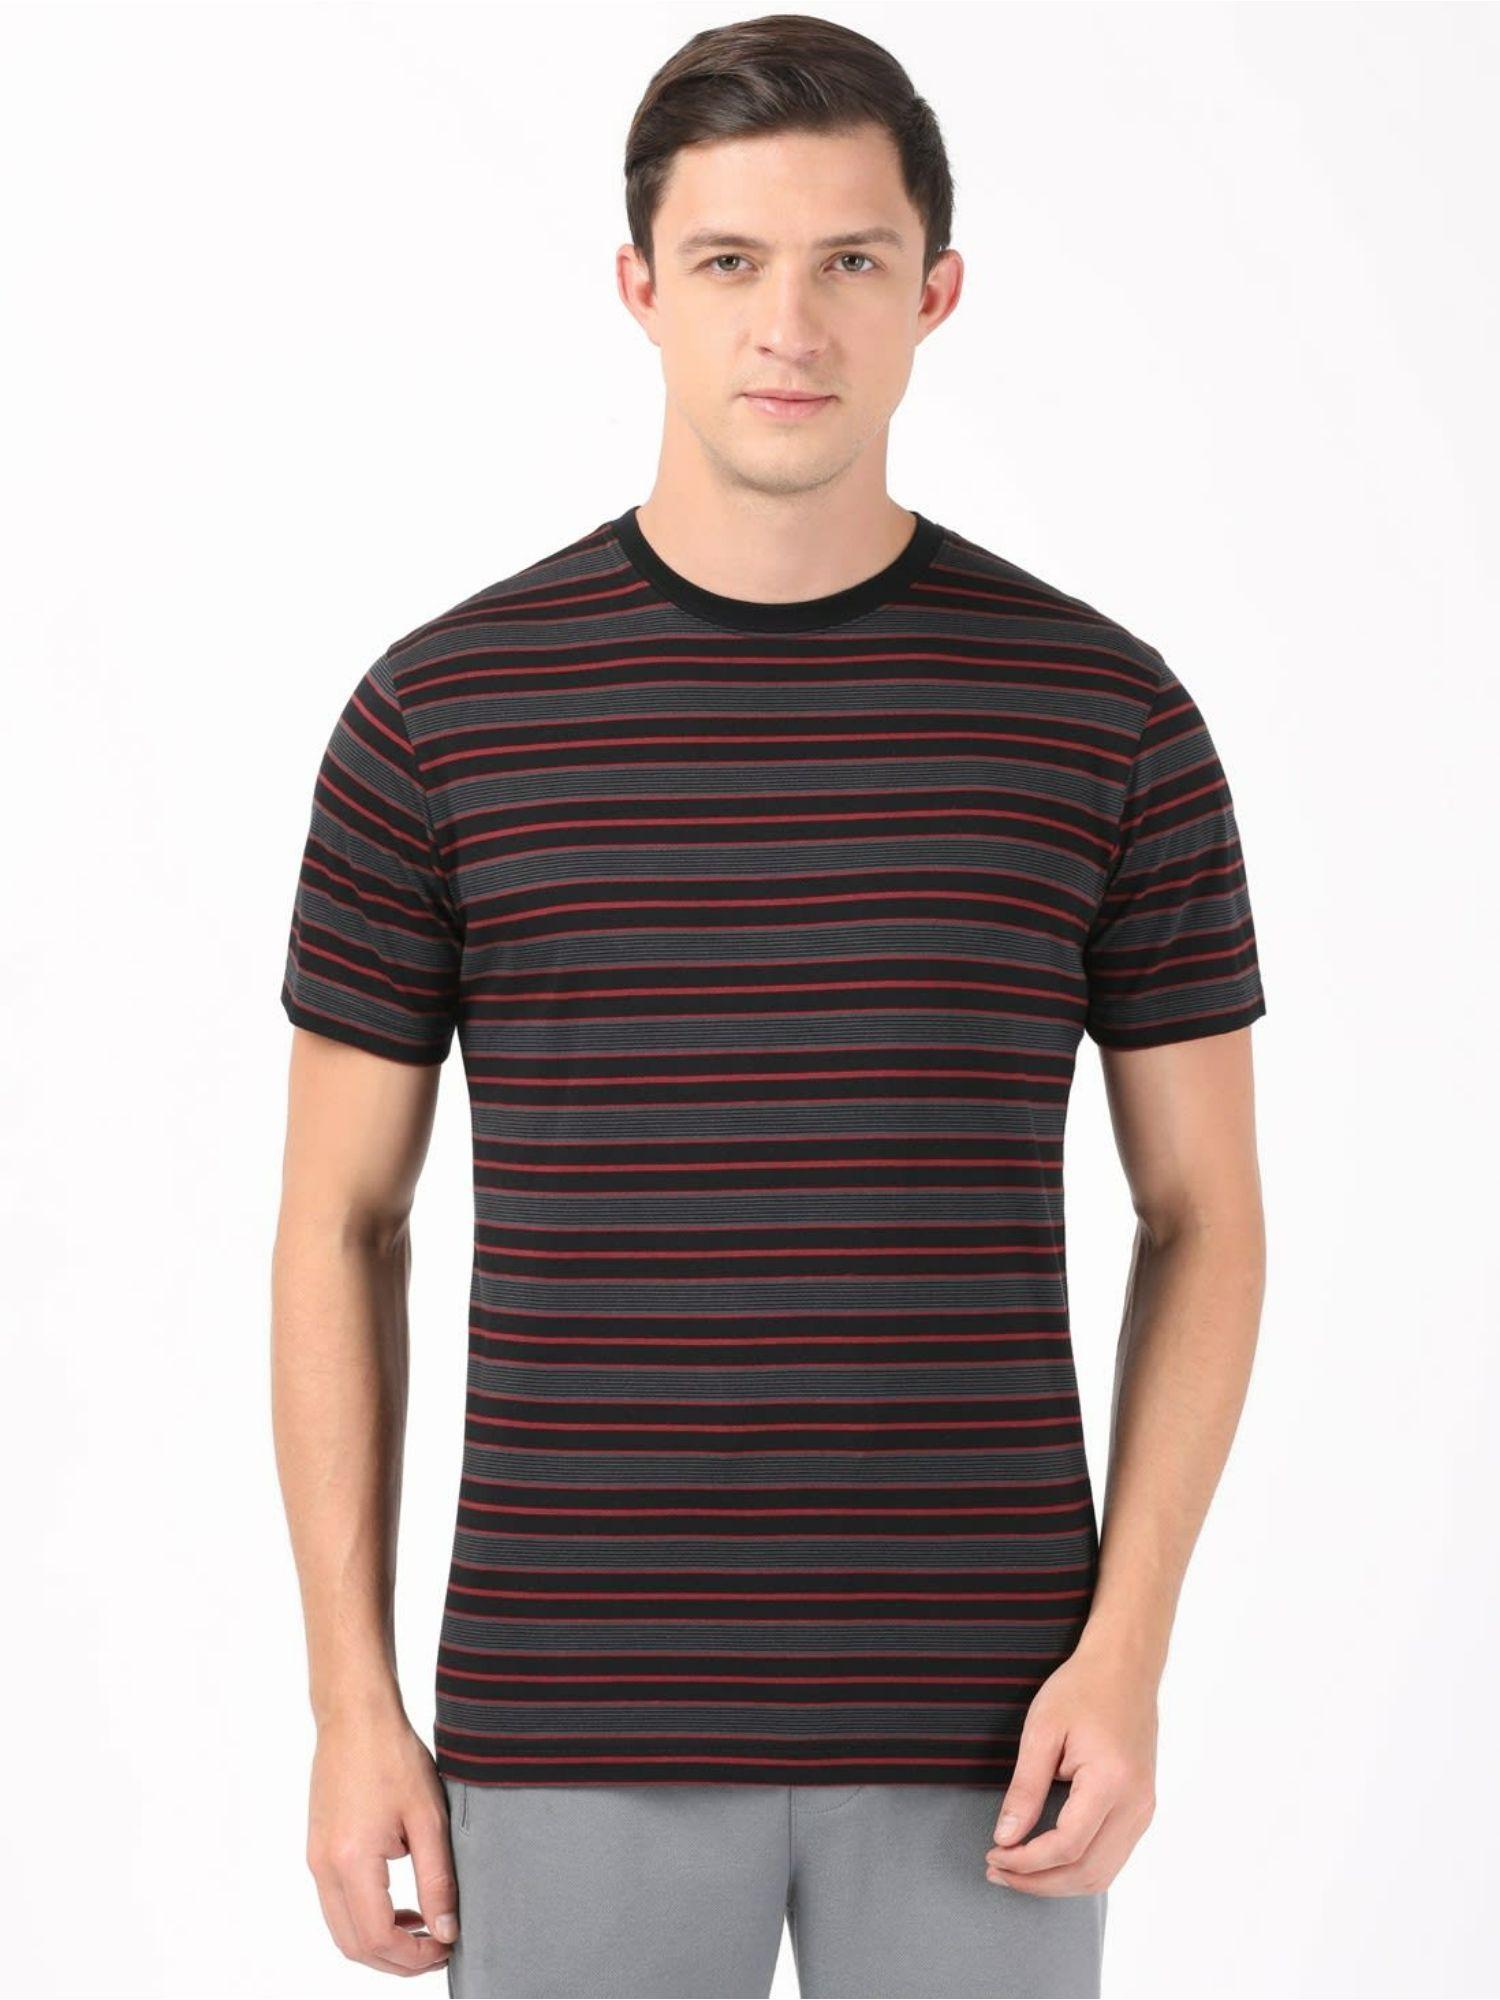 2715-mens-super-combed-cotton-rich-striped-round-neck-half-sleeve-t-shirt-black-&-grey